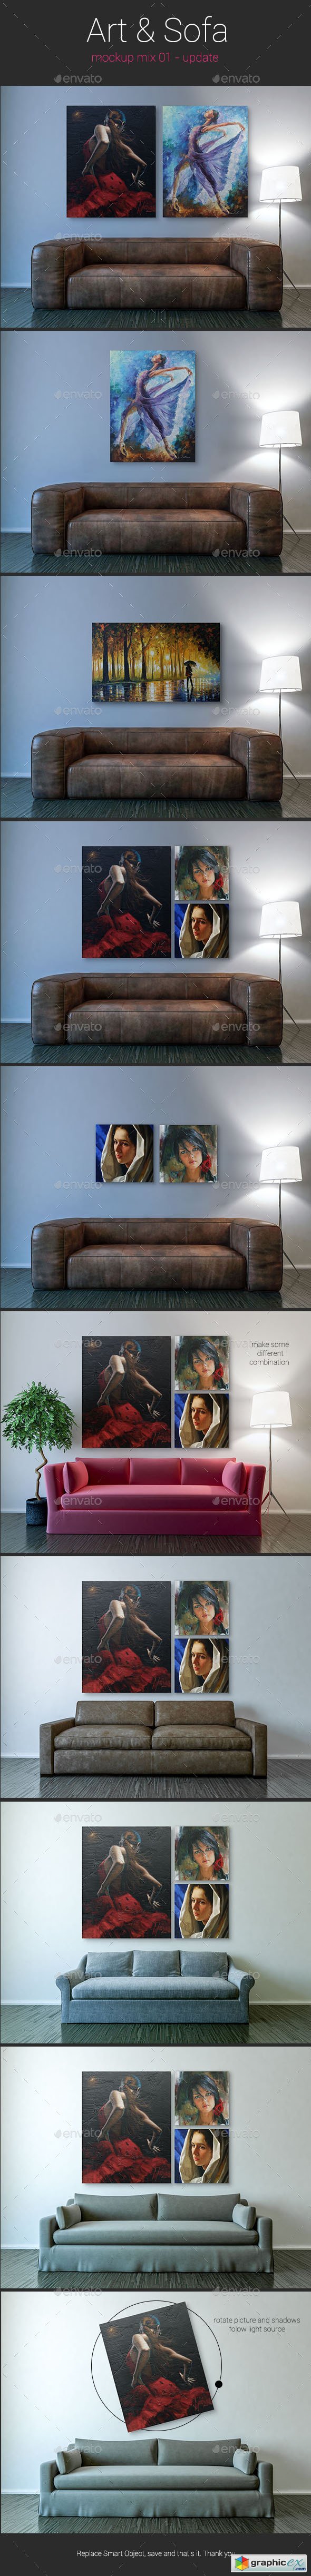 Art & Sofa Mockup